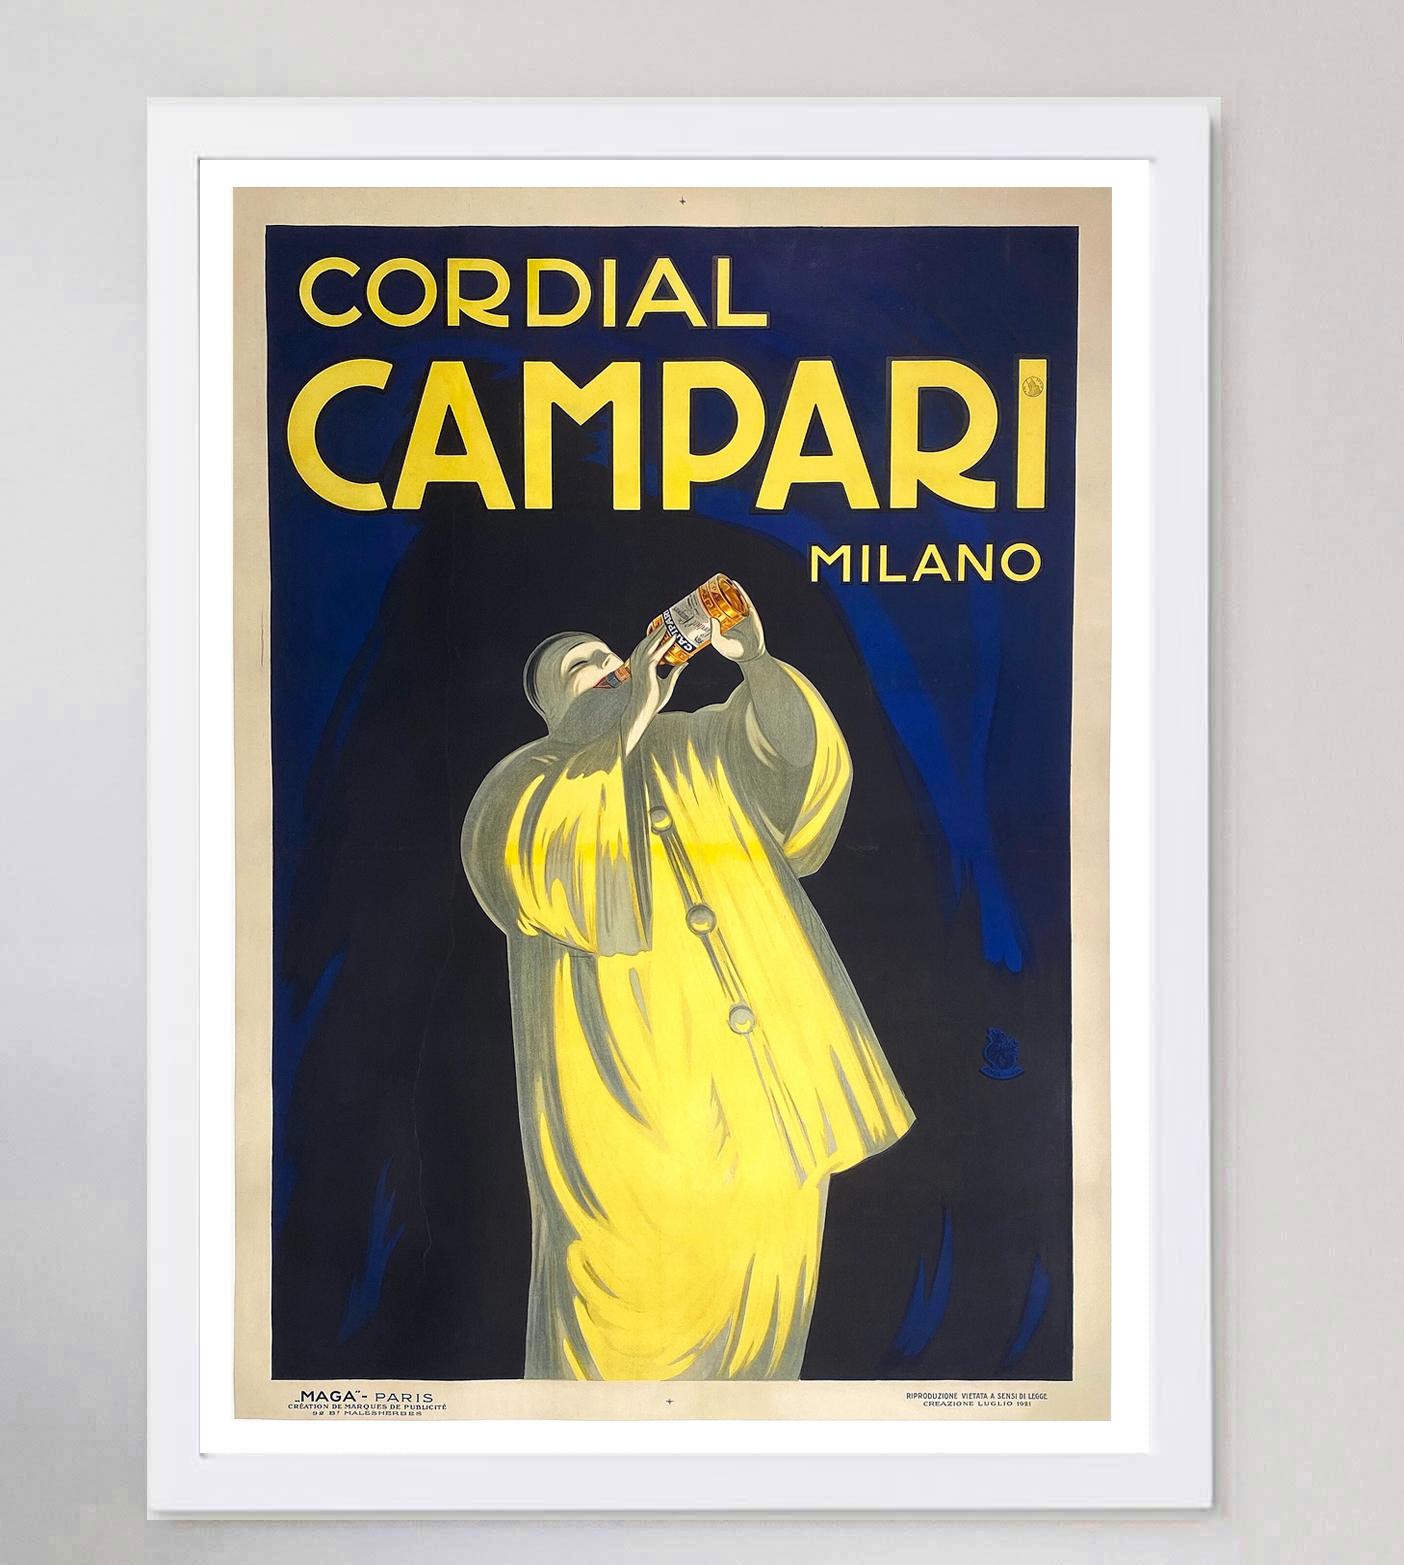 Art Deco 1921 Campari, Cordial Campari Milano Original Vintage Poster